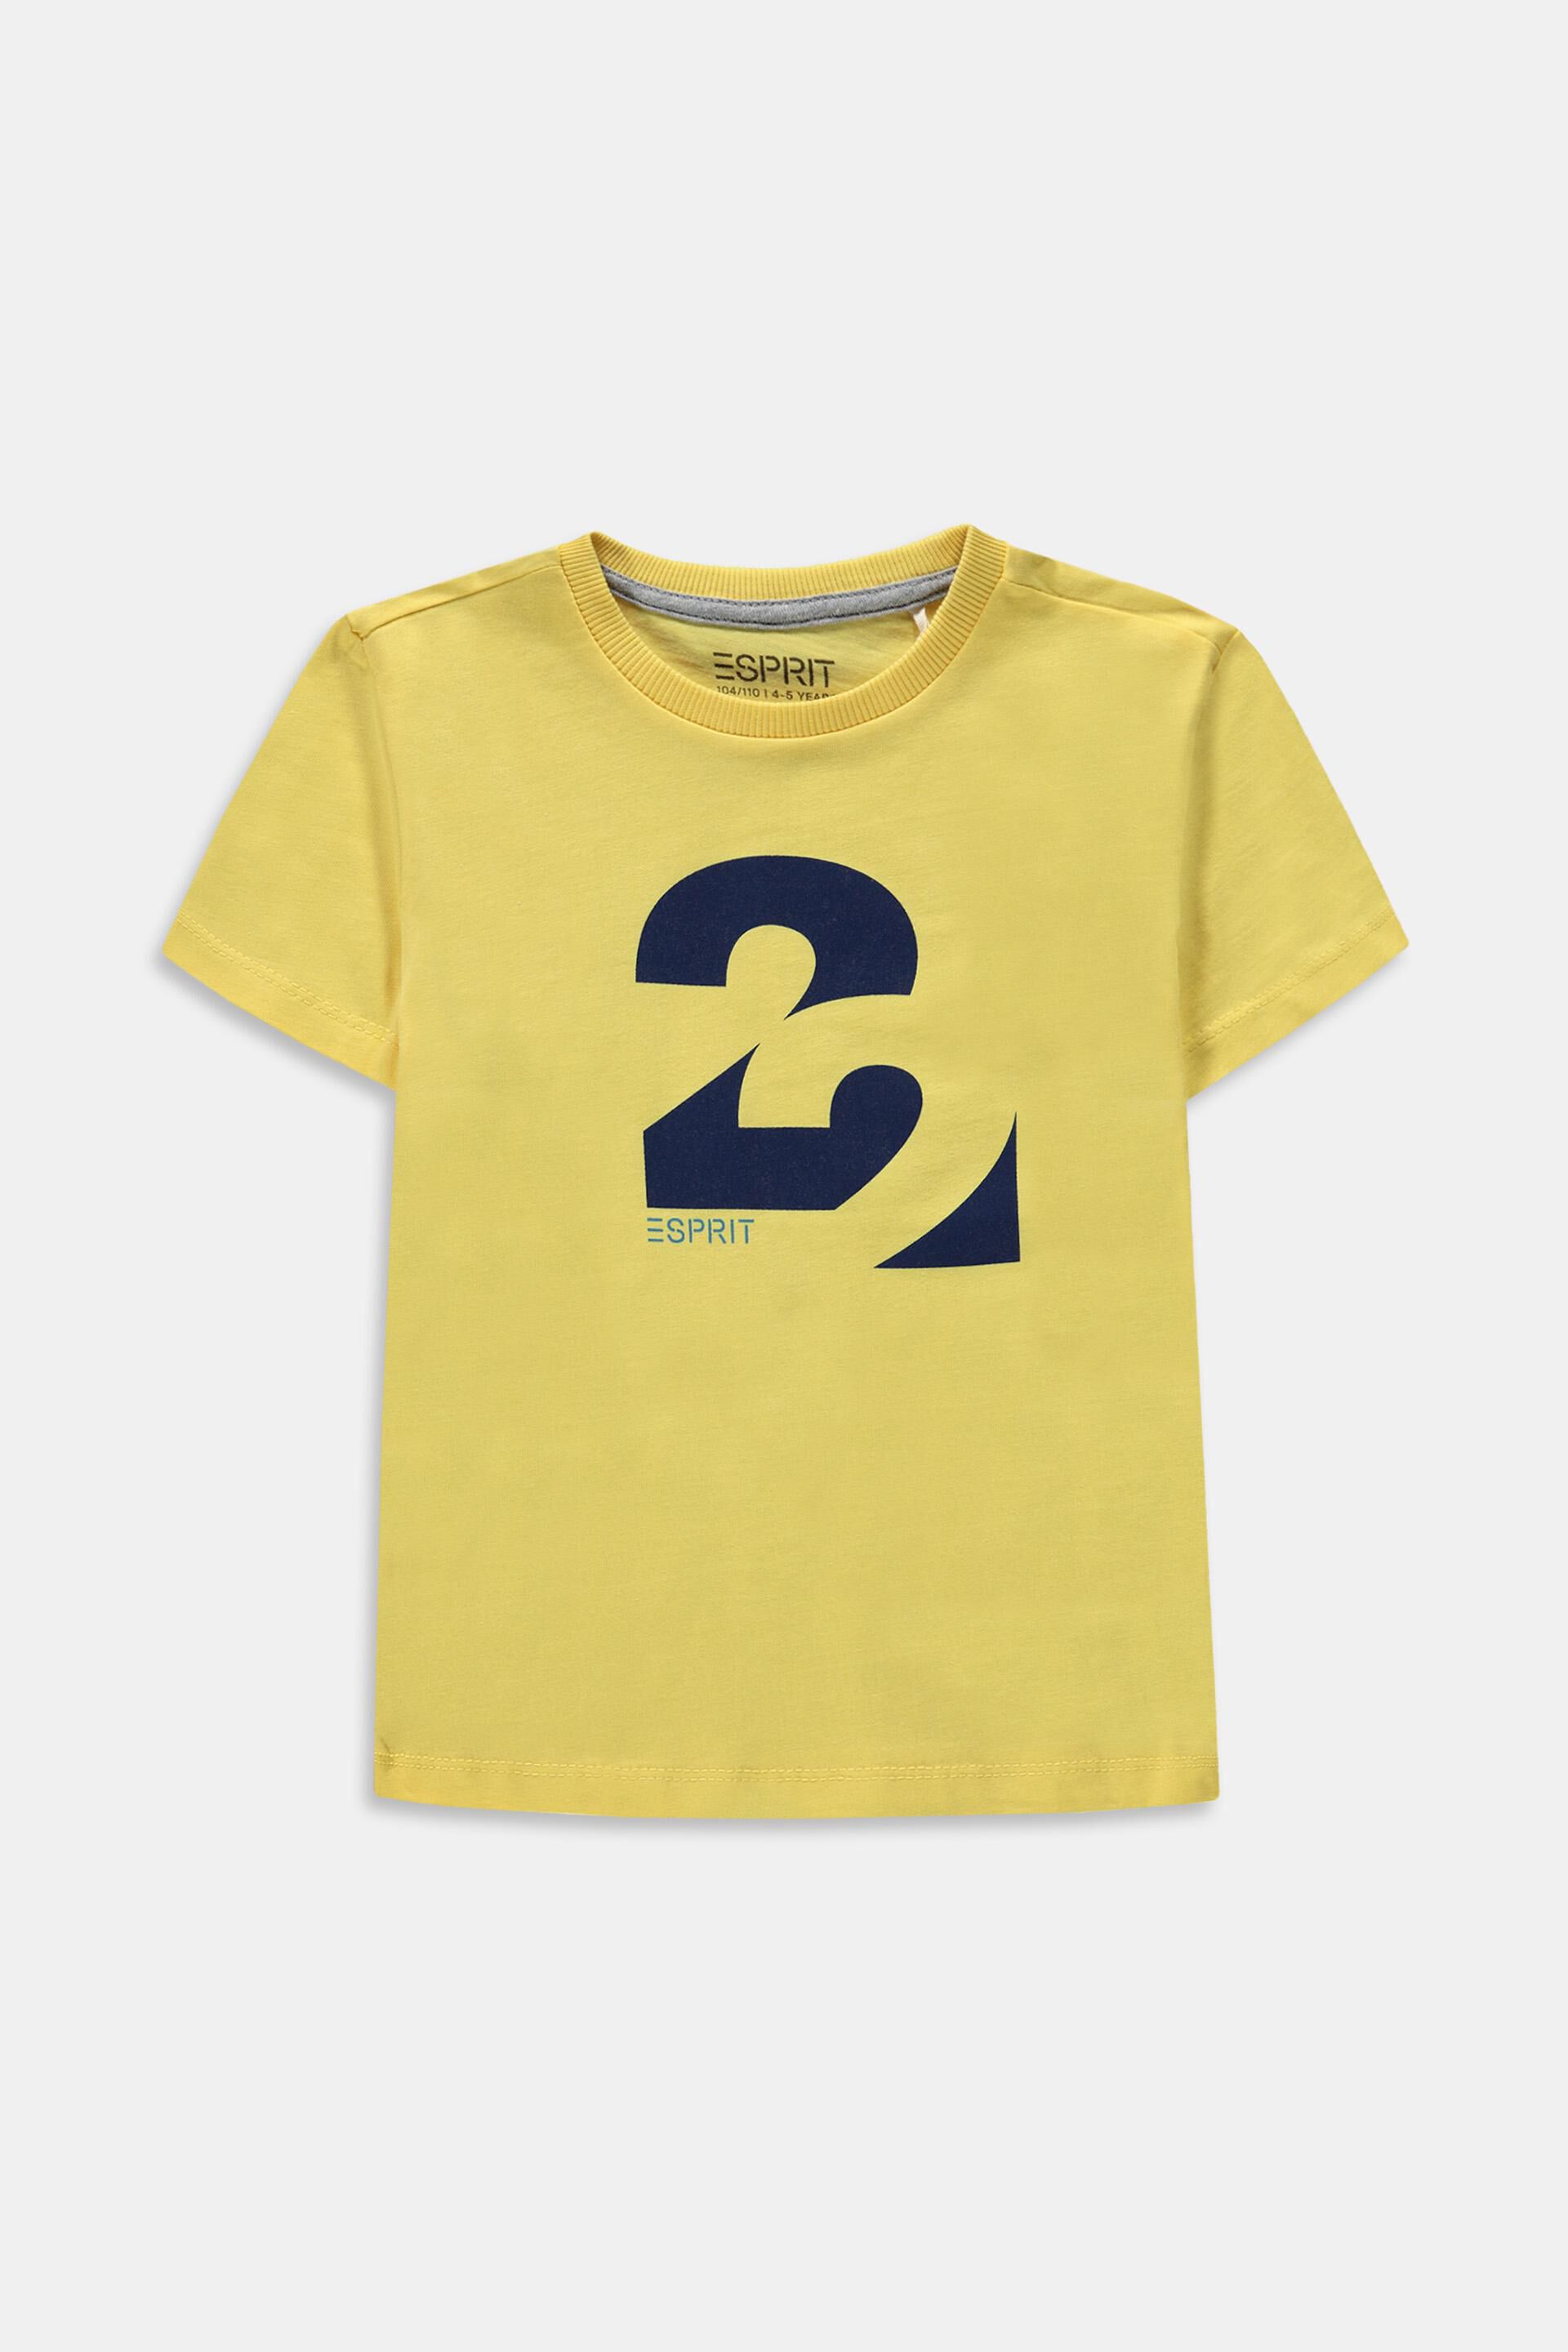 Rabatt 88 % NoName T-Shirt Gelb 6Y KINDER Hemden & T-Shirts Basisch 